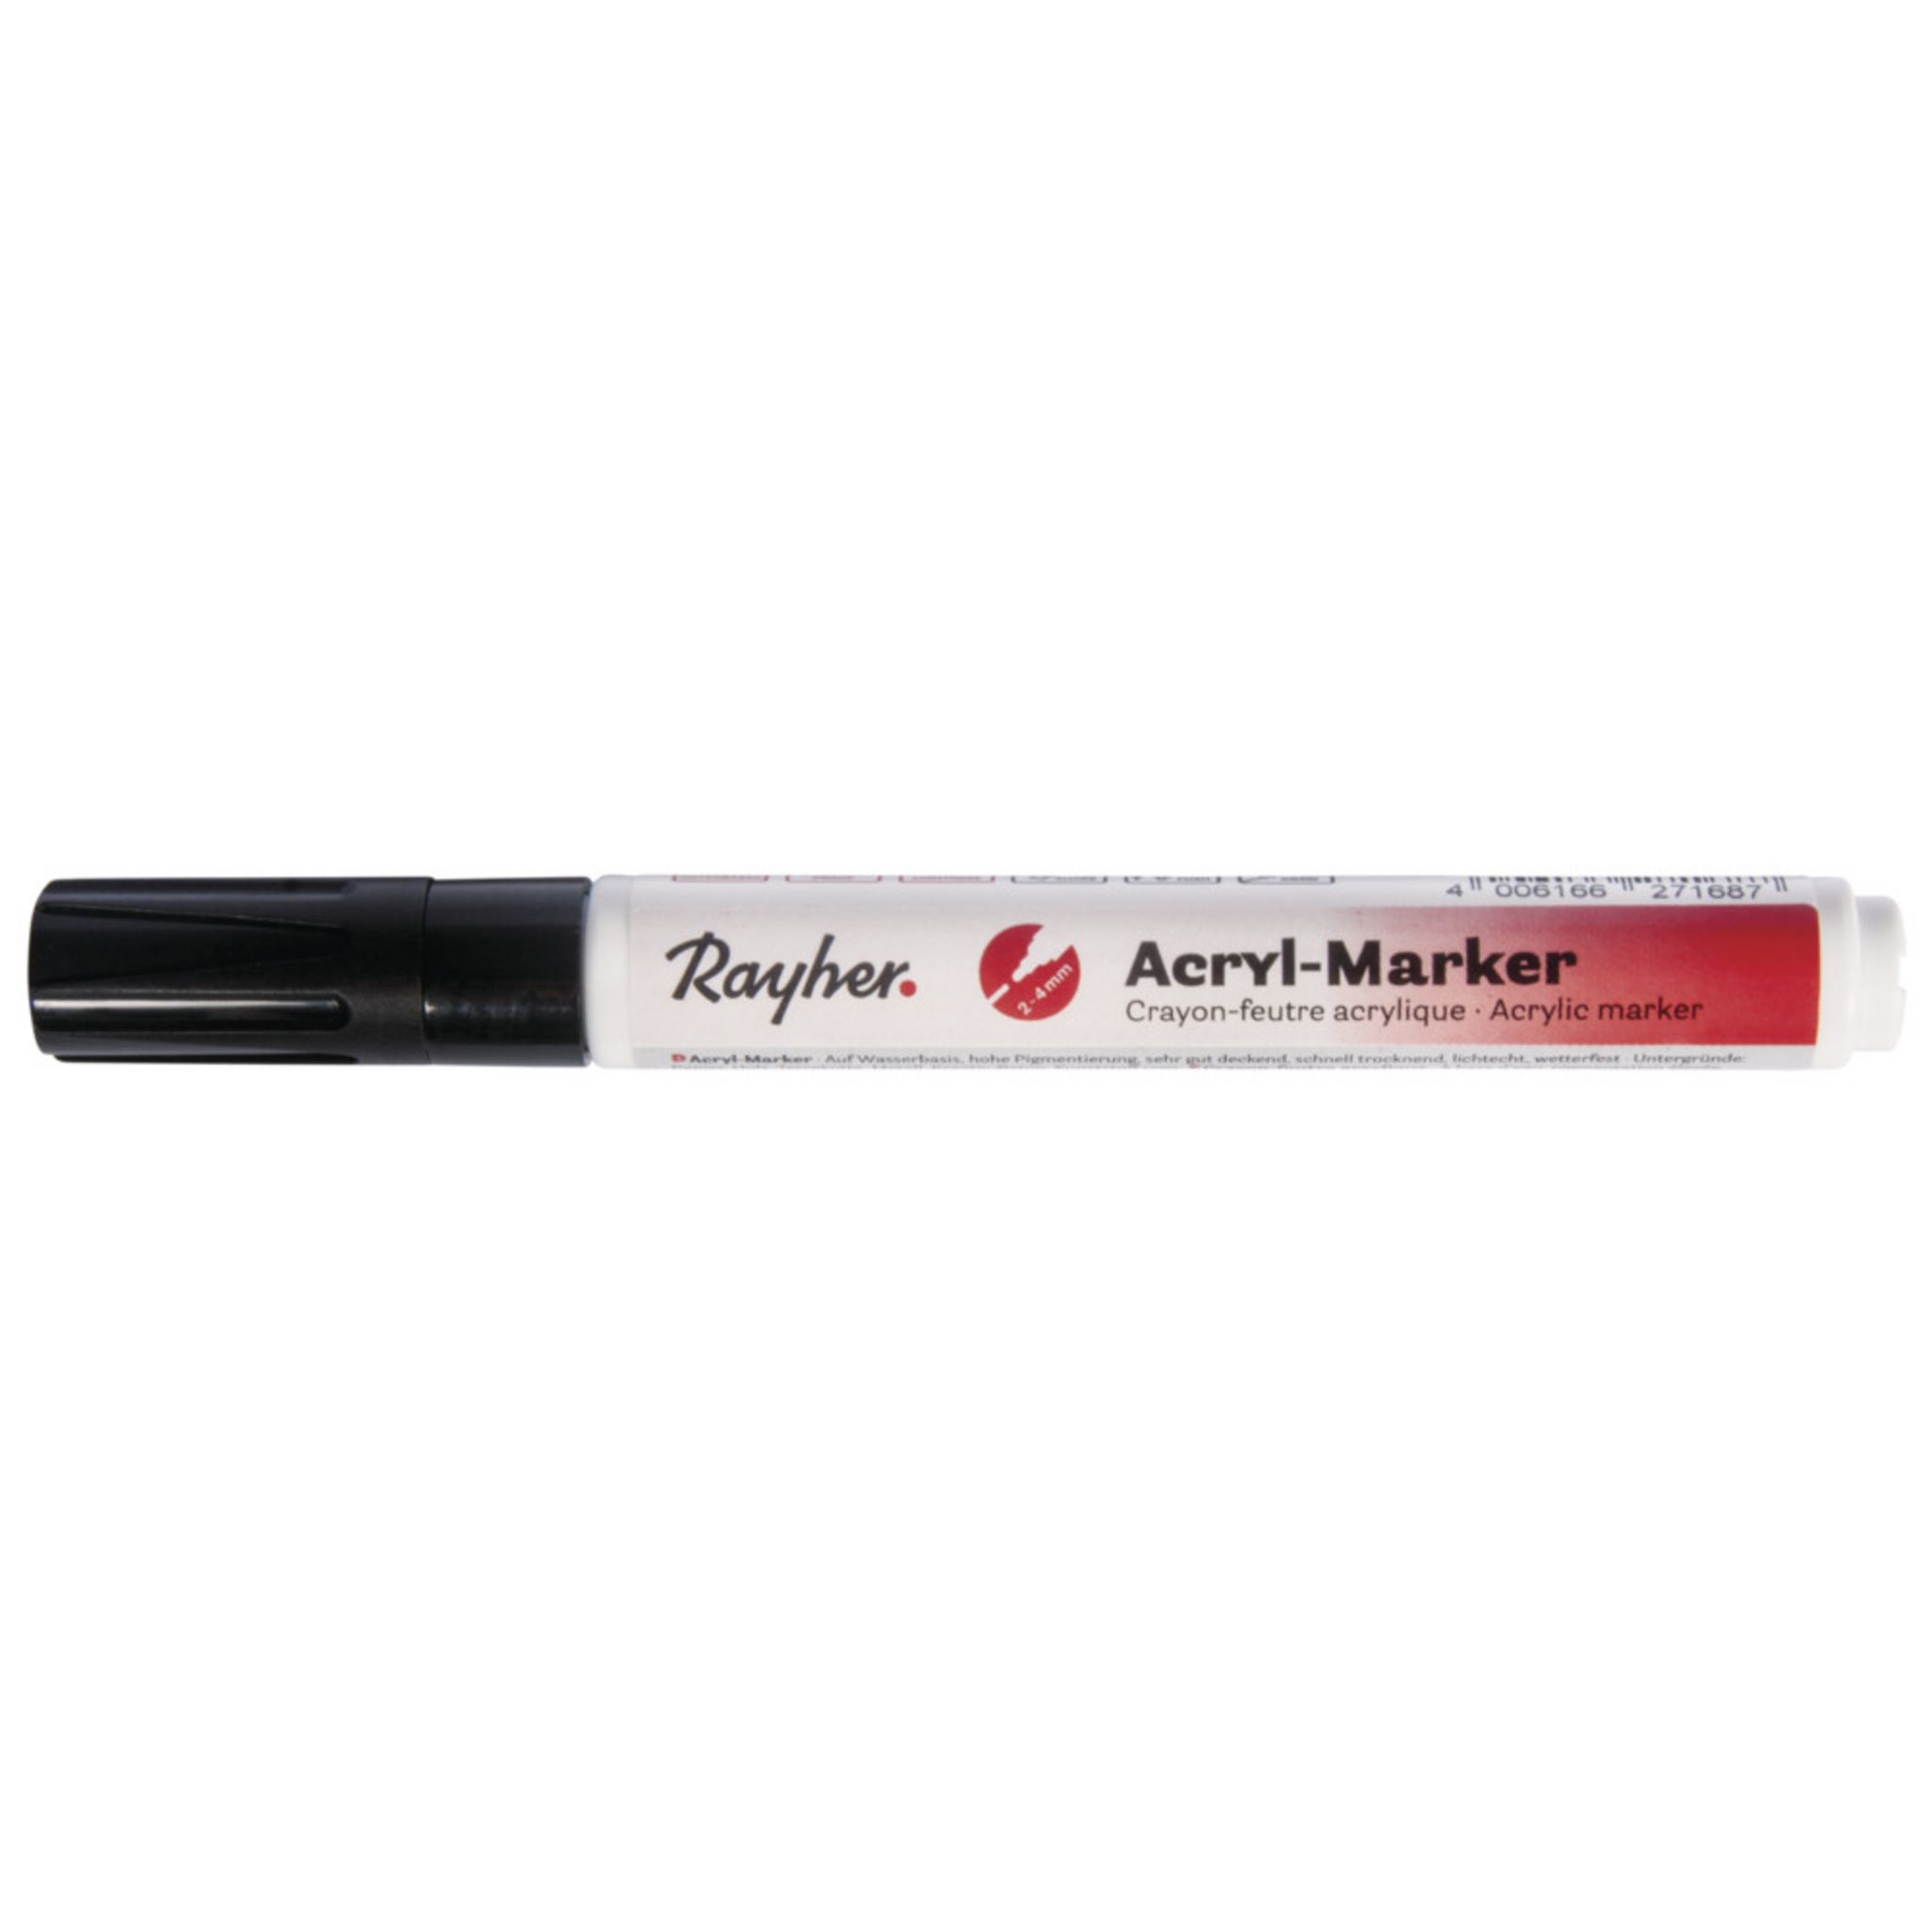 Crayon - feutre acrylique pointe ronde 1 - 4 mm Rayher 